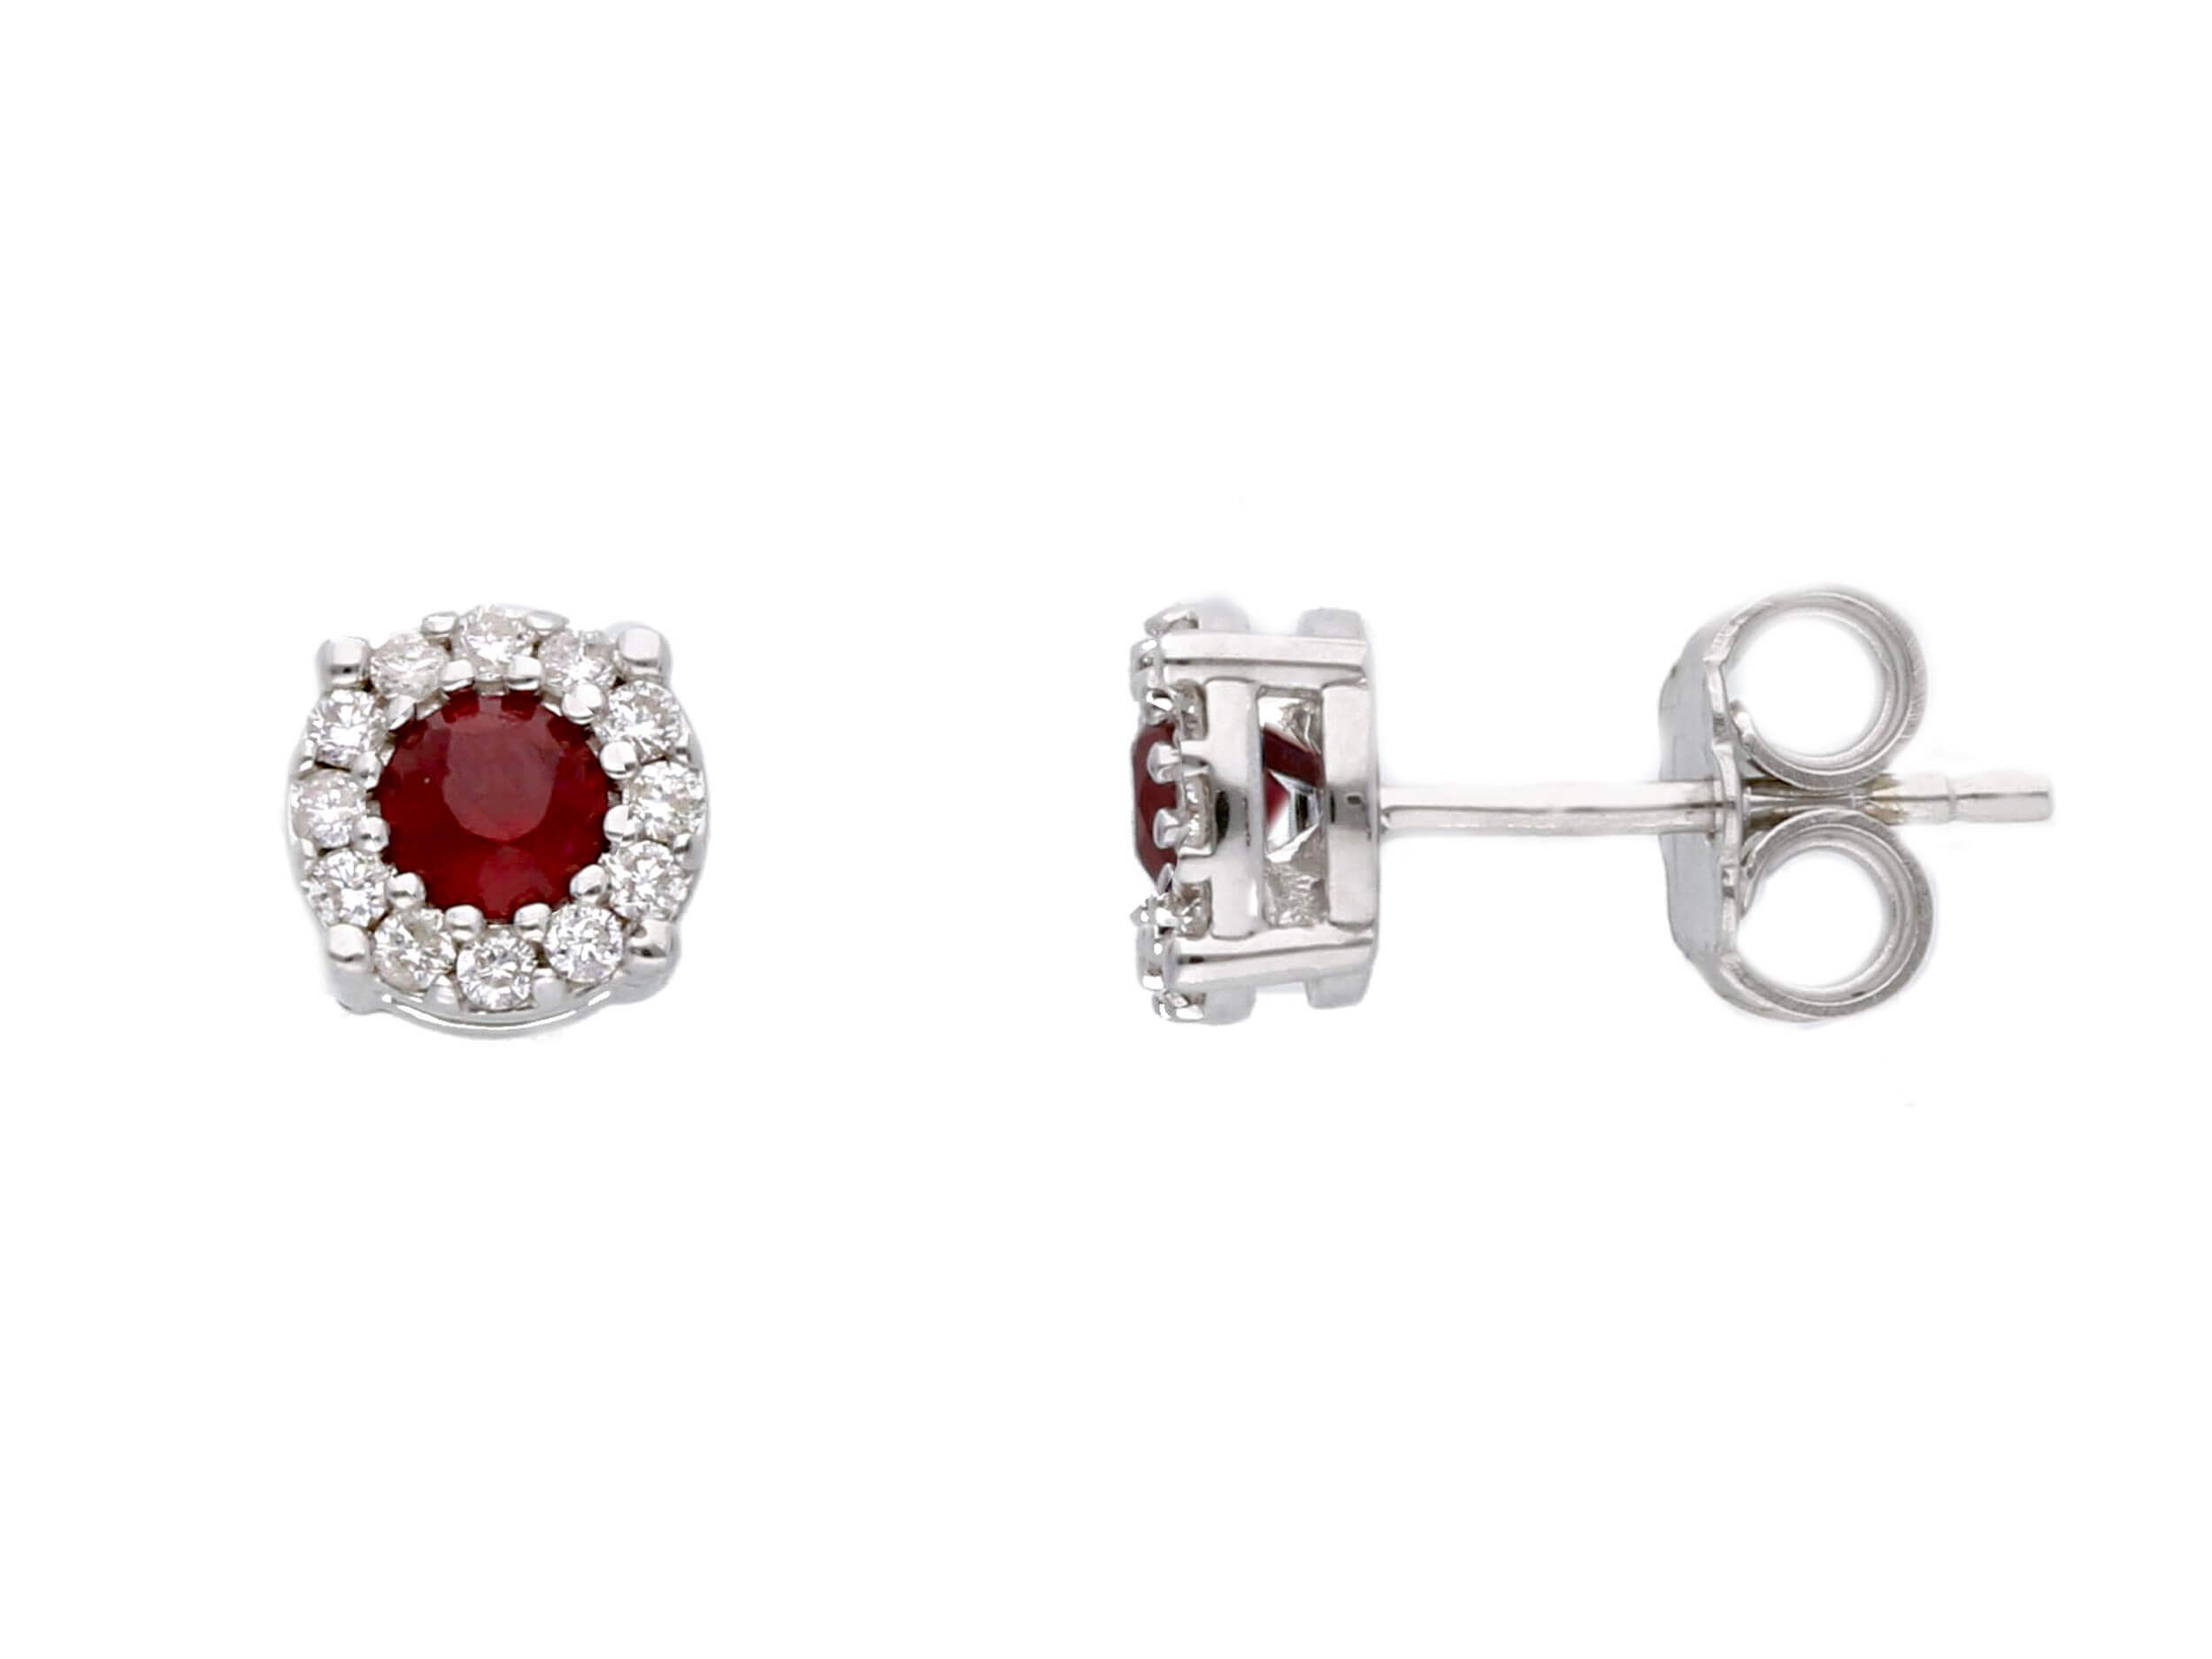 Ruby Earrings Gold and Diamonds BELLE EPOQUE Art. 264856RB